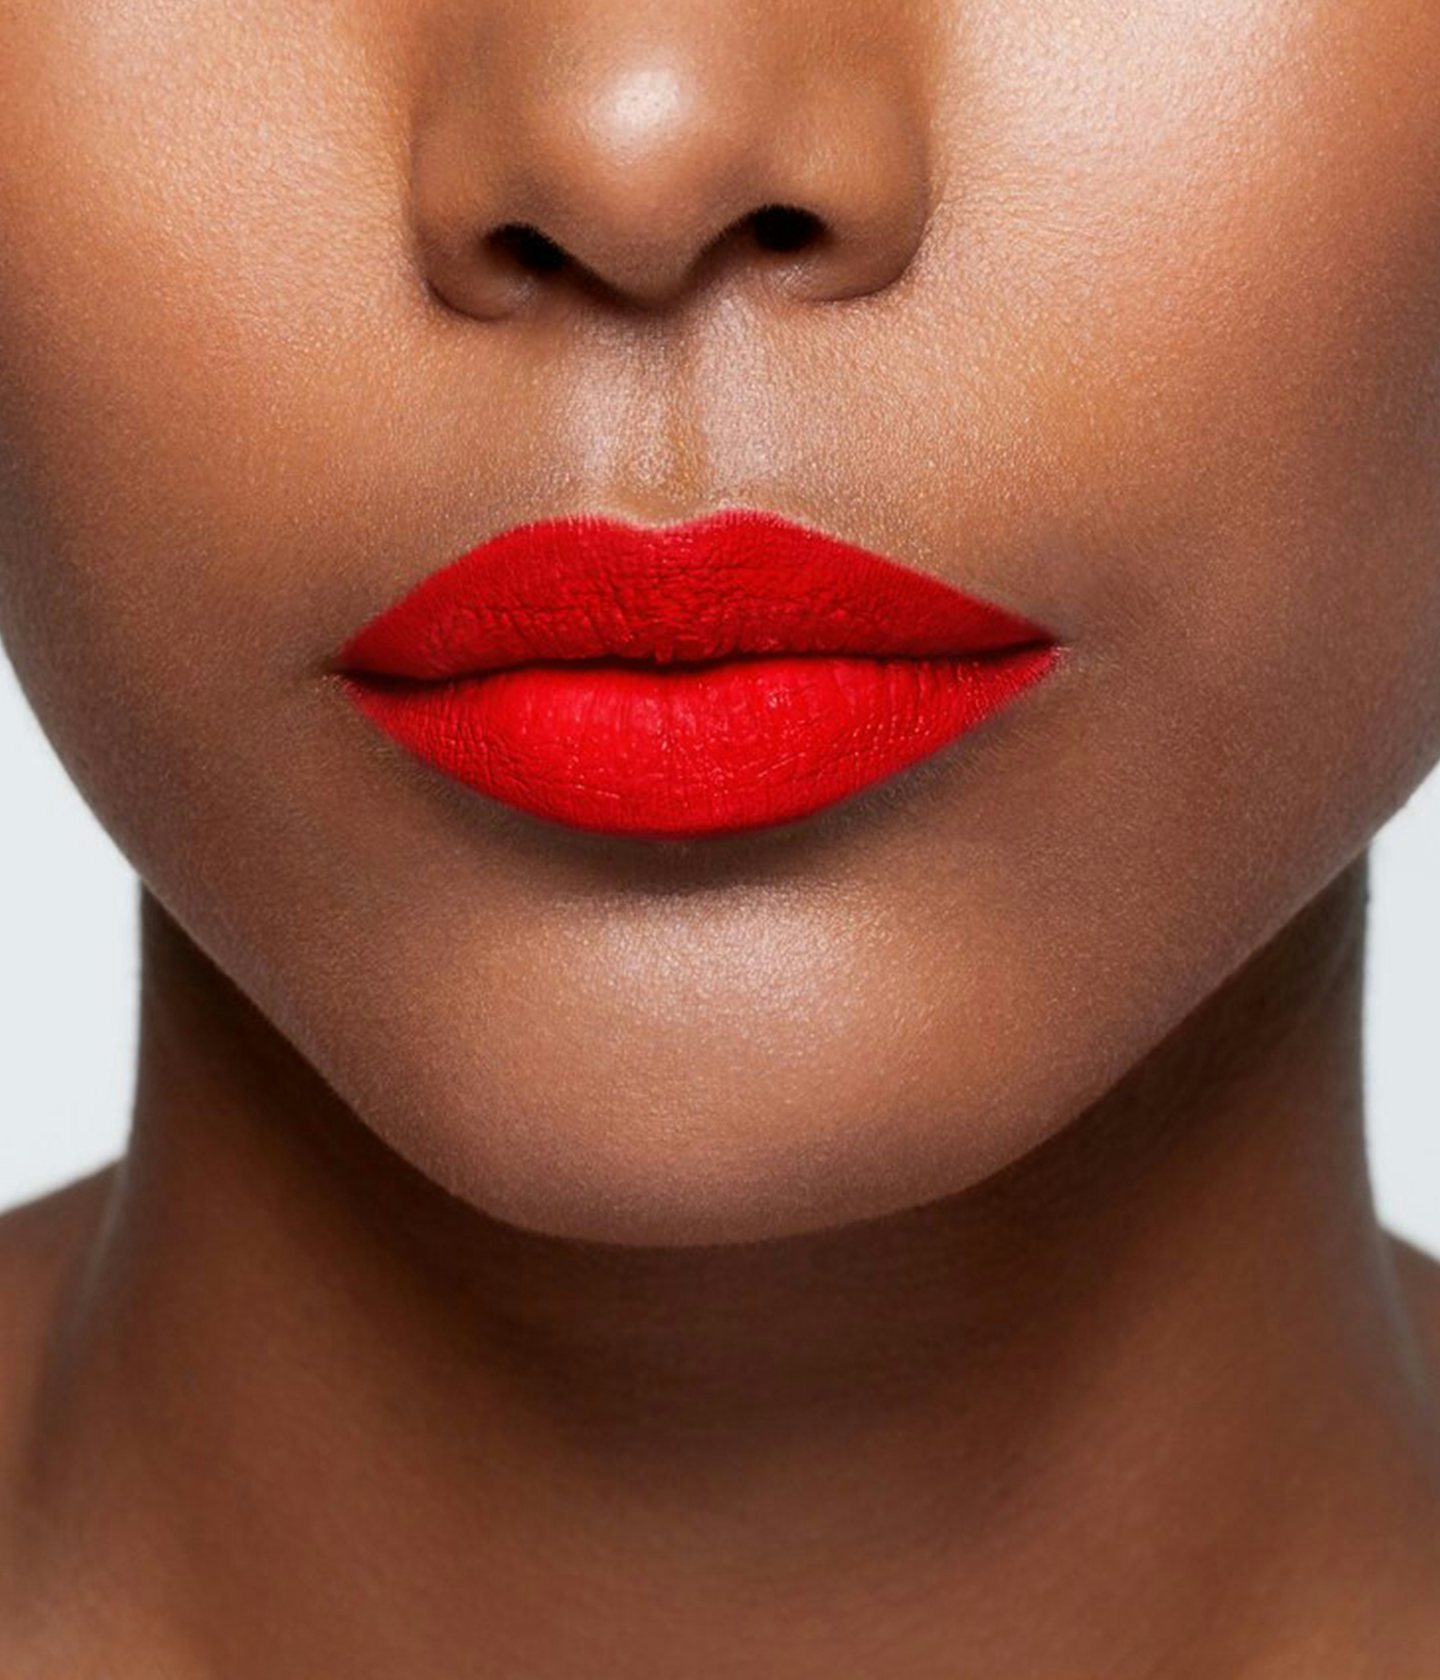 La bouche rouge Regal Red lipstick shade on the lips of a dark skin model